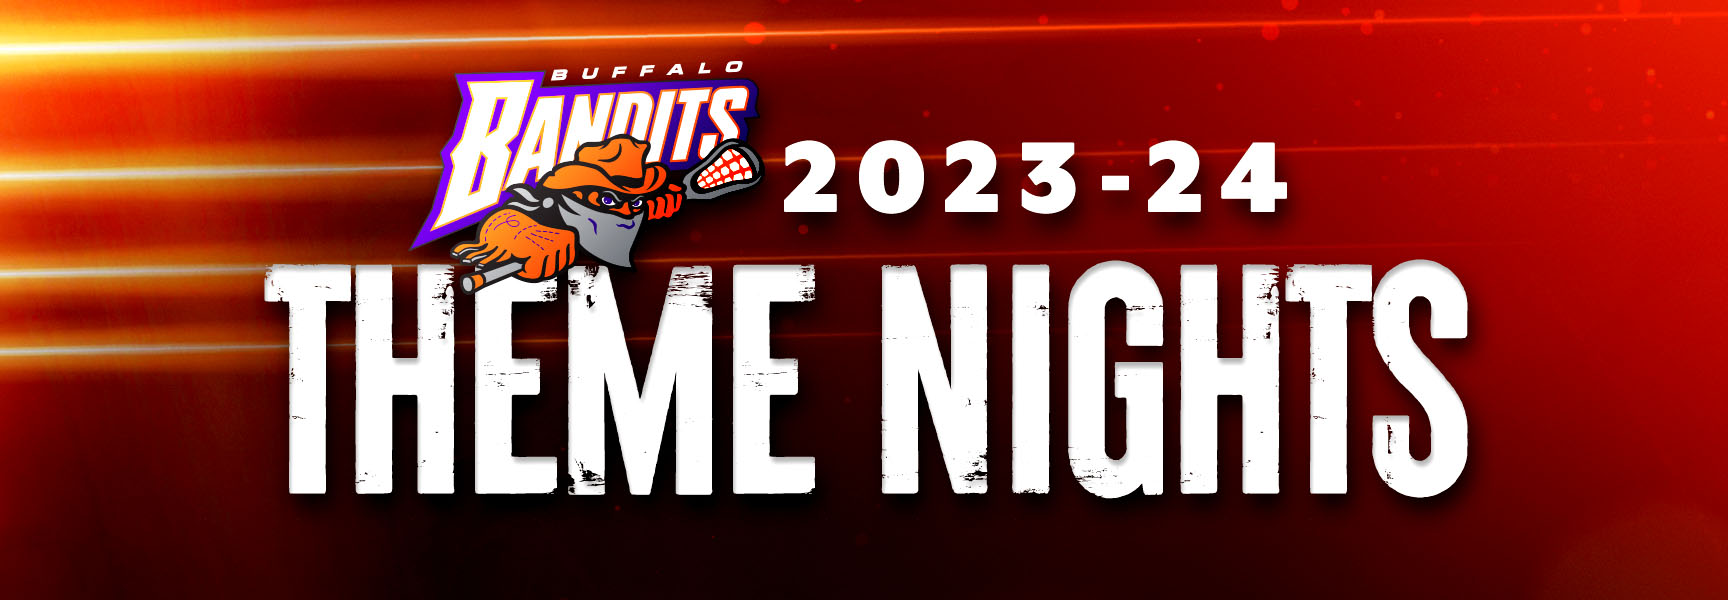 2023-24 Theme Nights